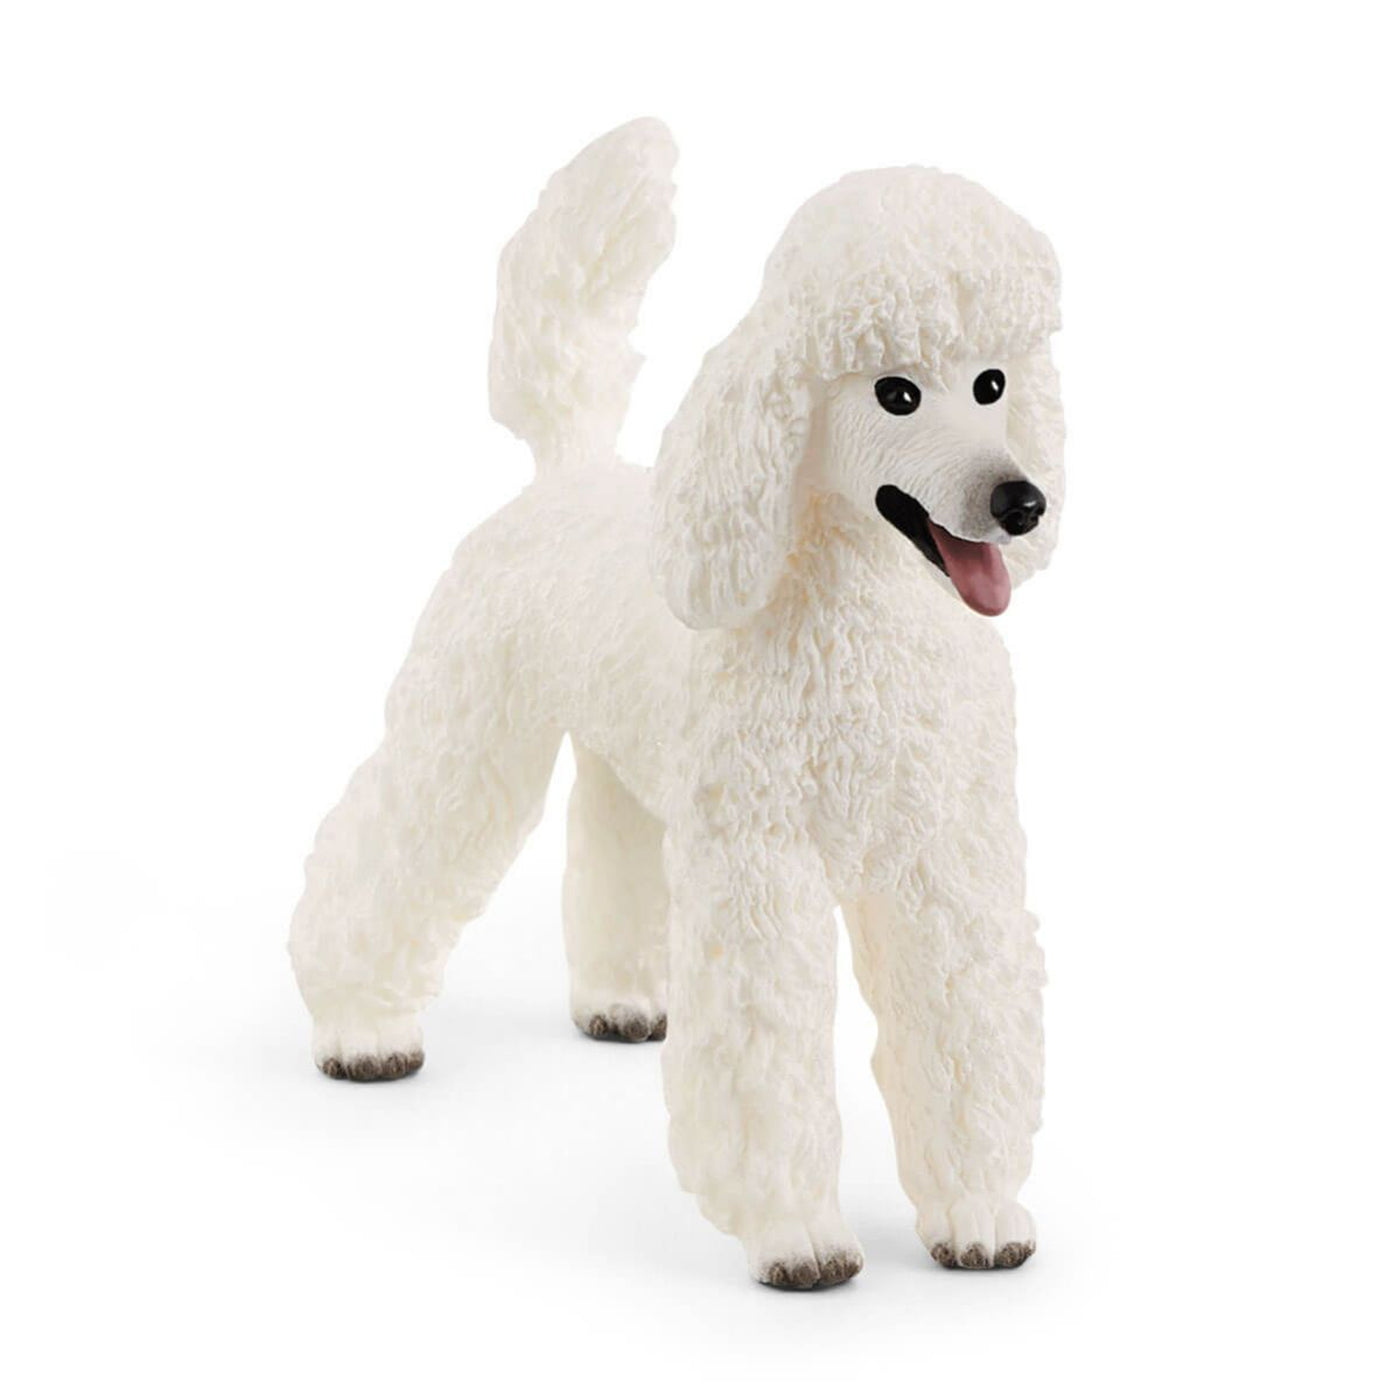 Schleich Farm World Poodle Toy Figurine